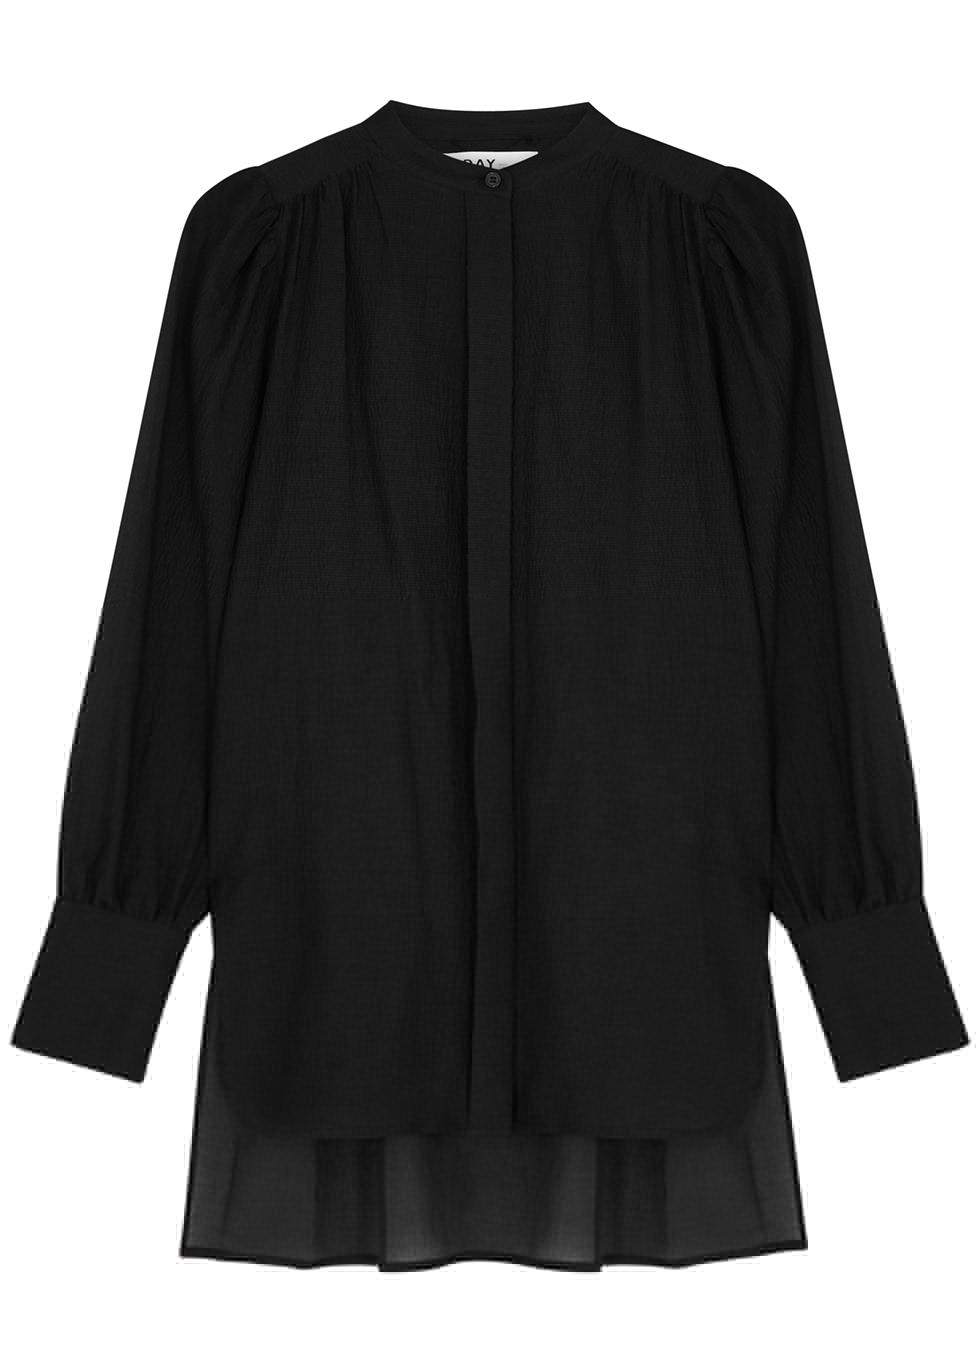 Hani black cotton-blend blouse by DAY BIRGER ET MIKKELSEN